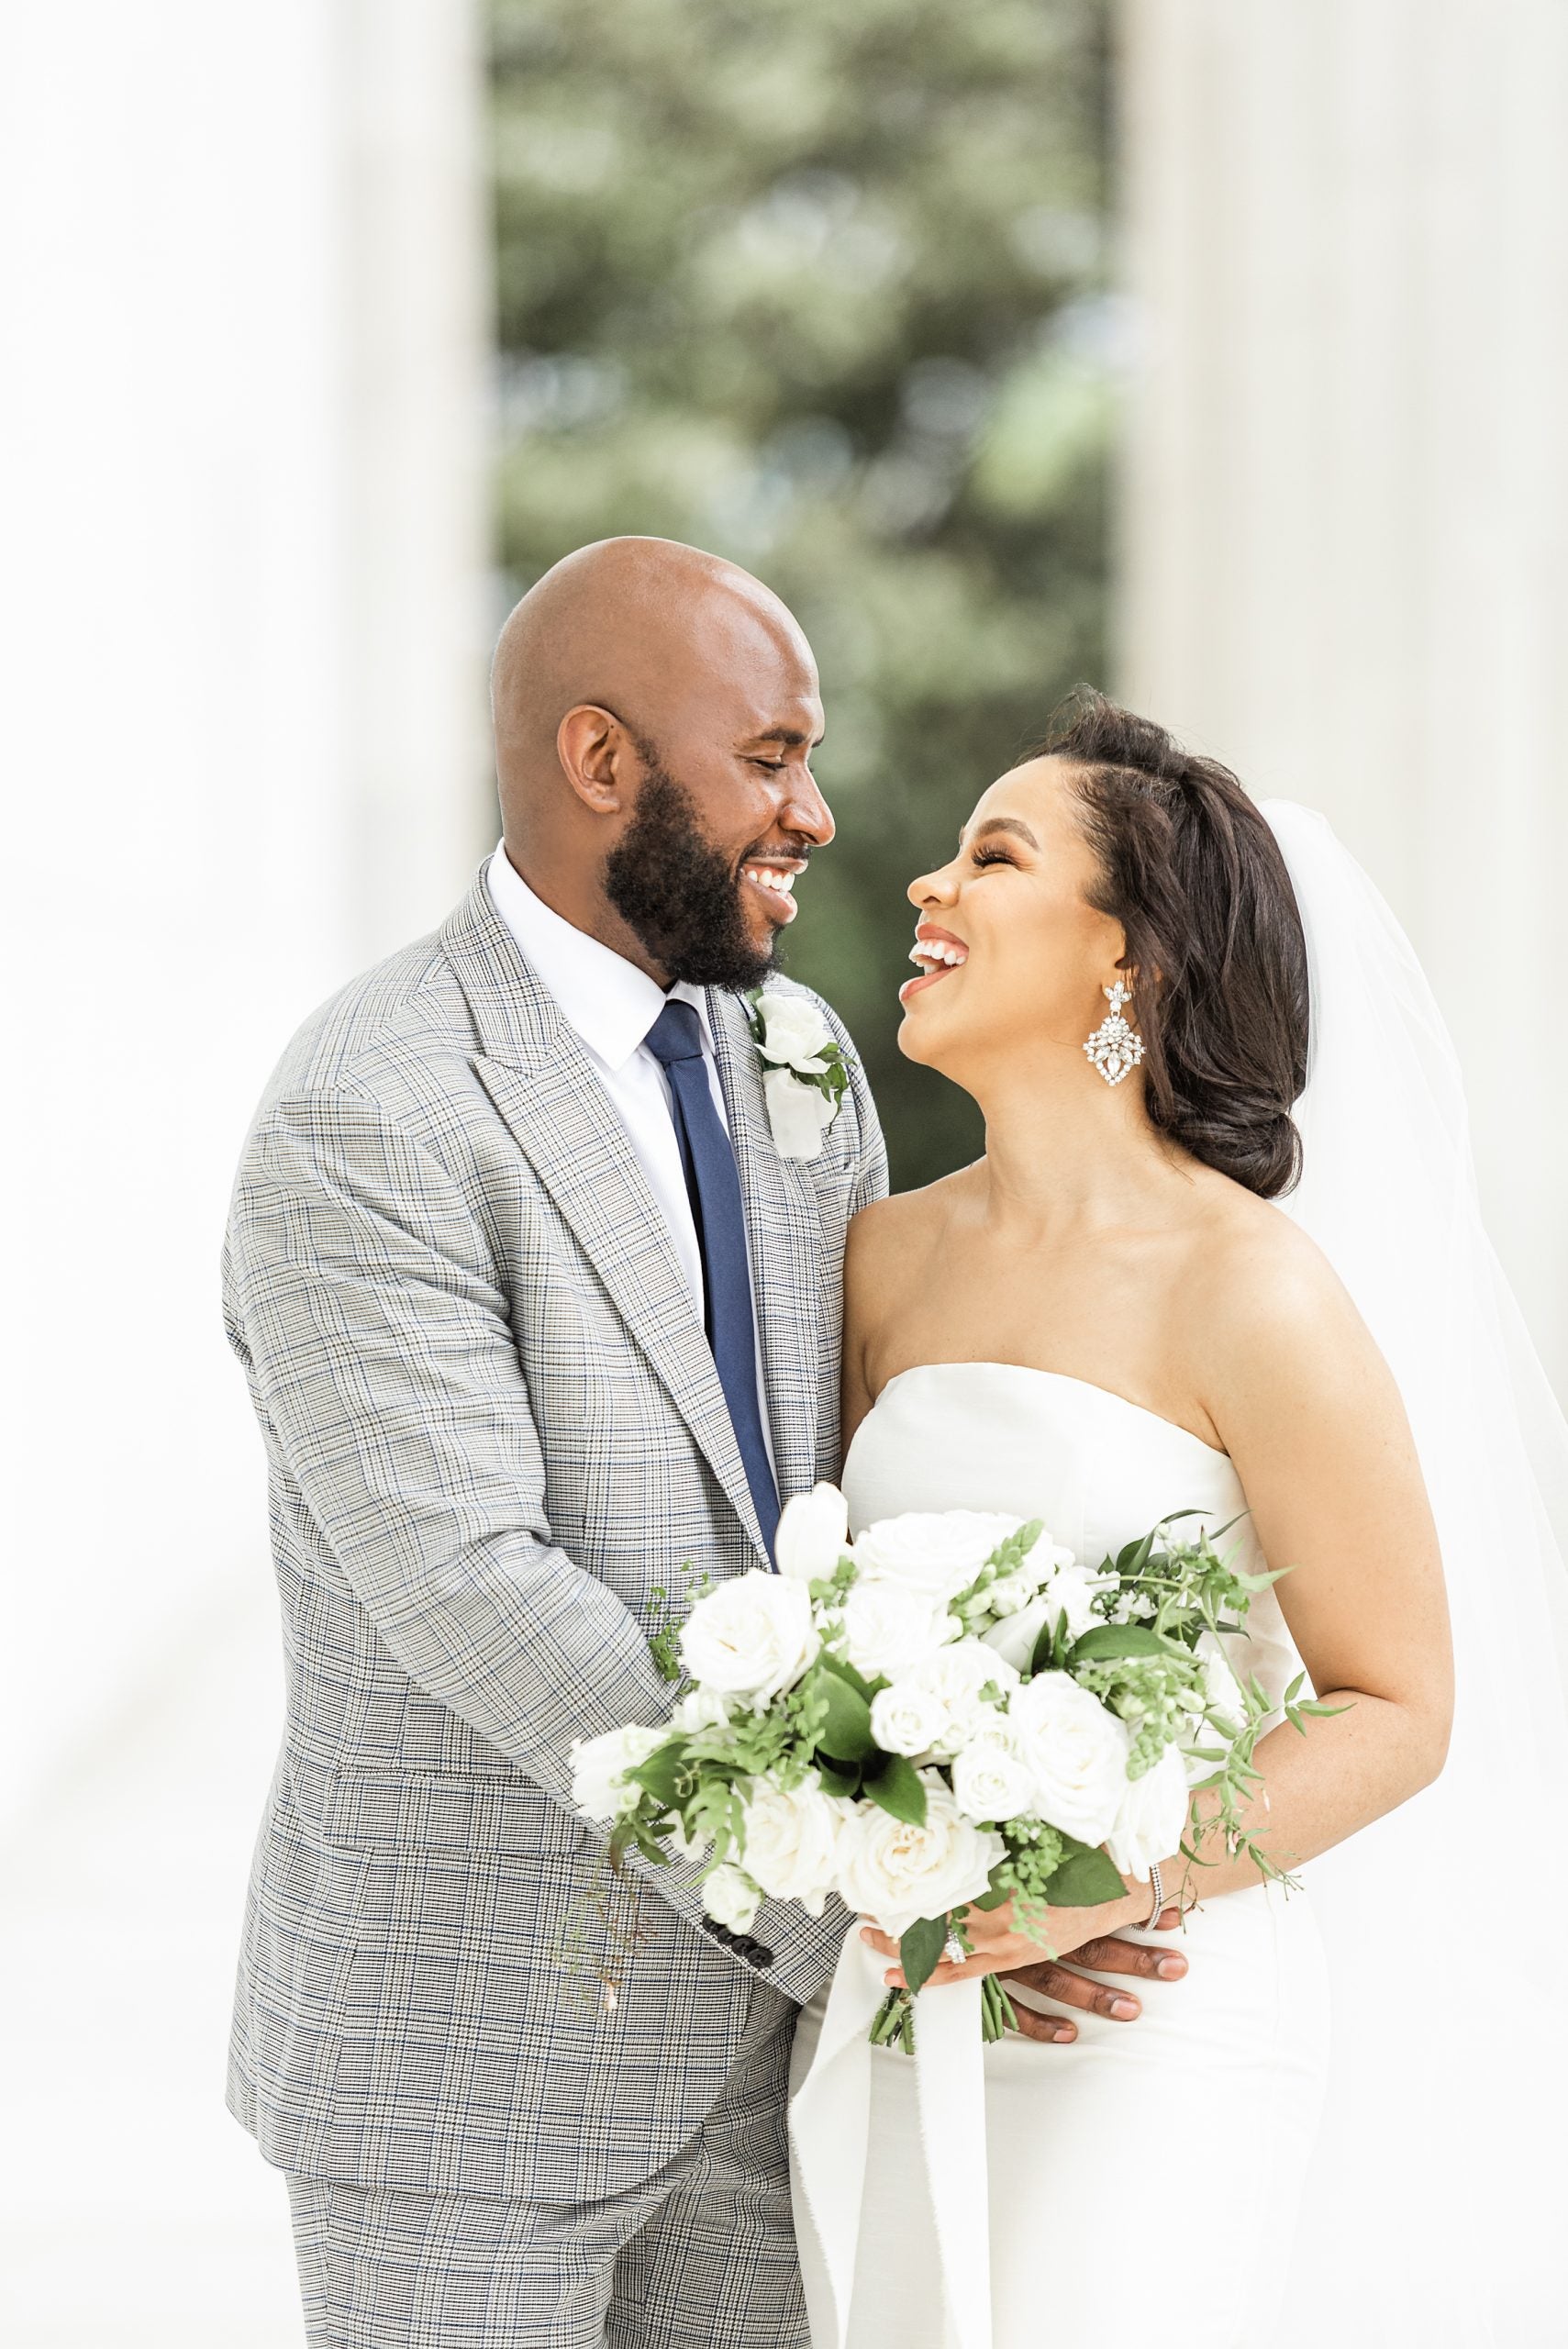 Bridal Bliss: Lauren and Warren's Socially Distanced Wedding Made Love The Star